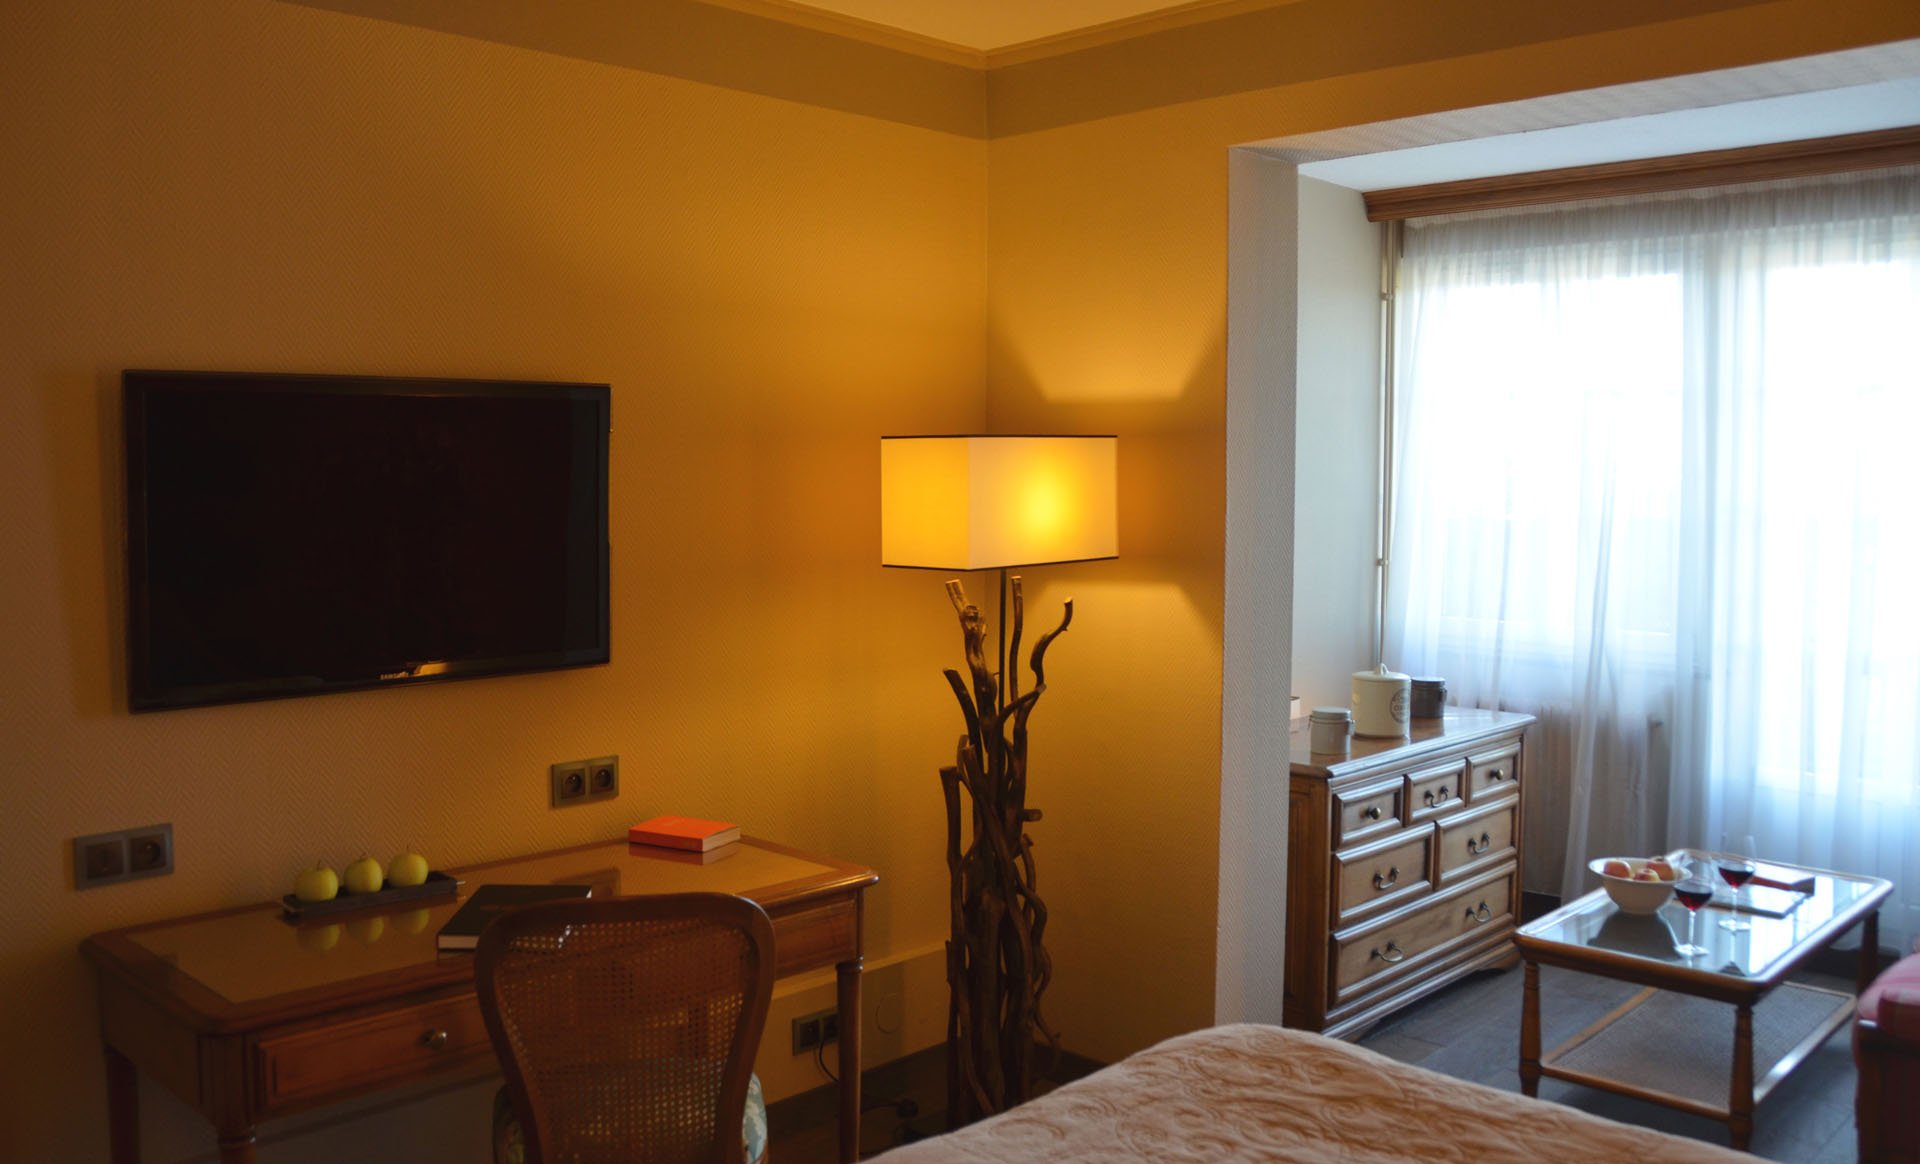 316/Hostellerie_des_Chateaux/Photos/HOTEL_SPA_ALSACE/Hotel_Obernai_Ottrott_Chambres/Residences_Hotel_Spa_Alsace_pas_Cher/Confort Residence/Hotel_Alsace_pas_Cher.jpg